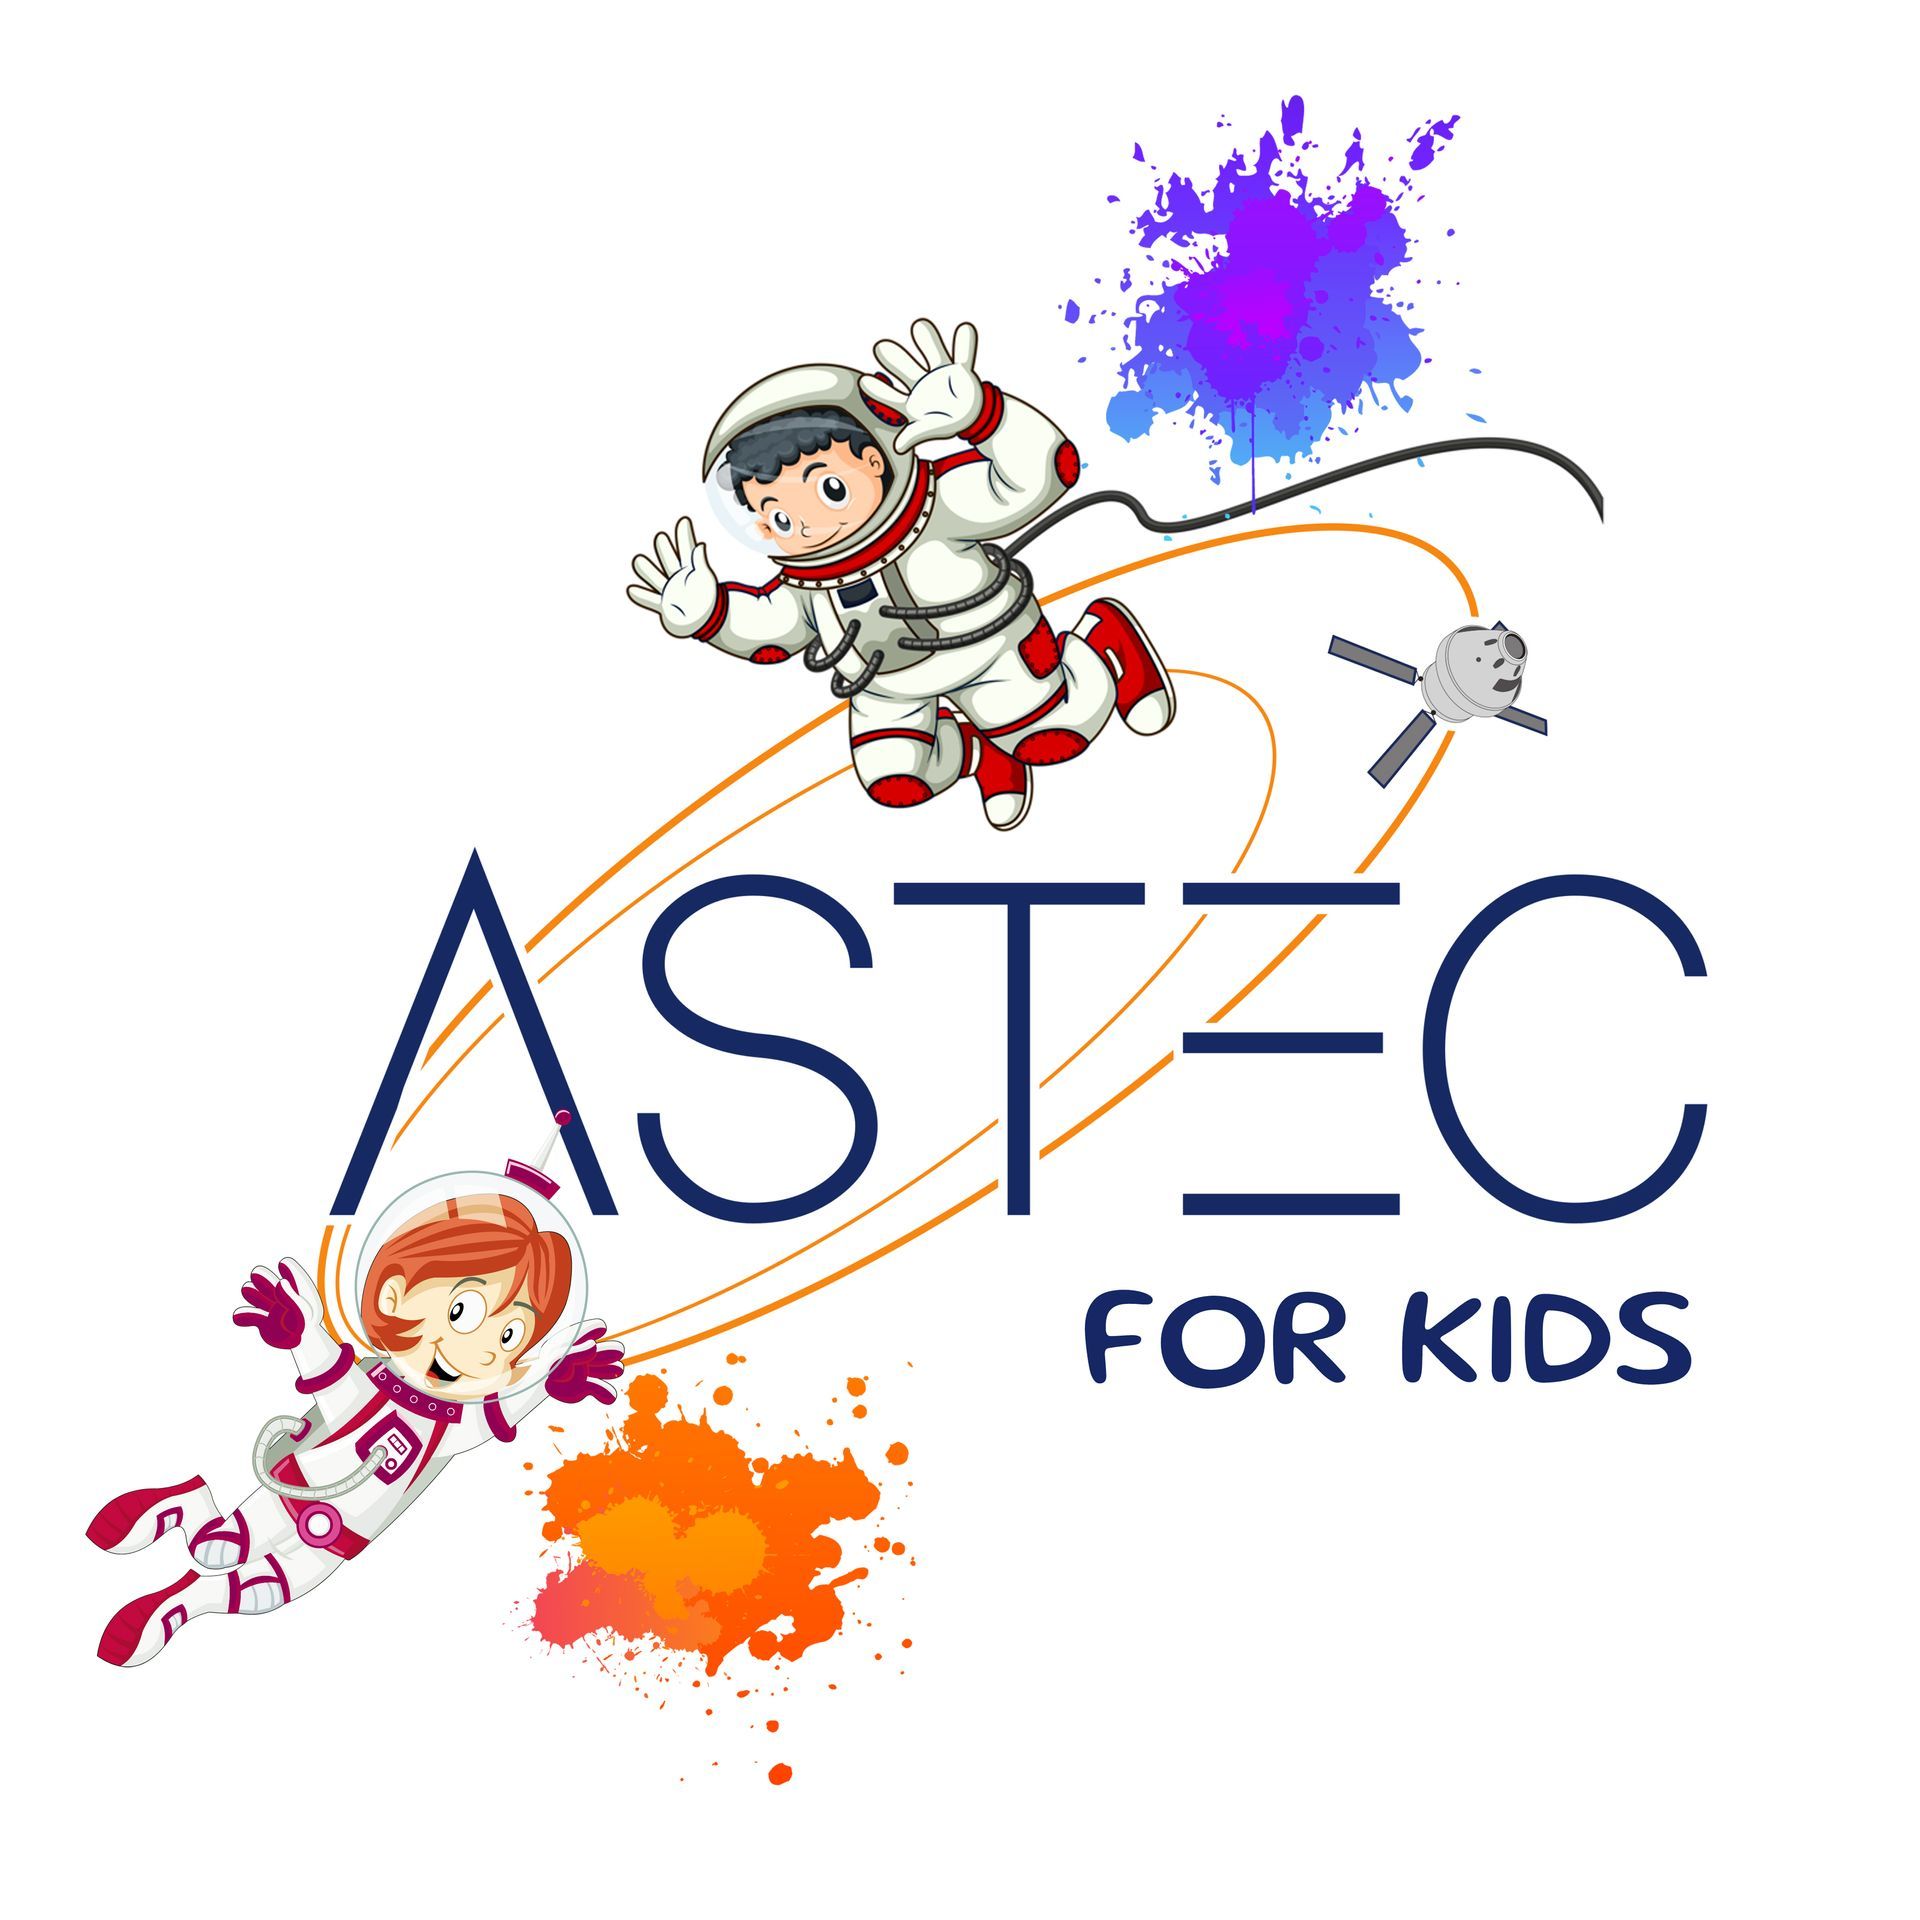 ASTEC FOR KIDS Rubrica di divulgazione scientifica aerospaziale per bambini